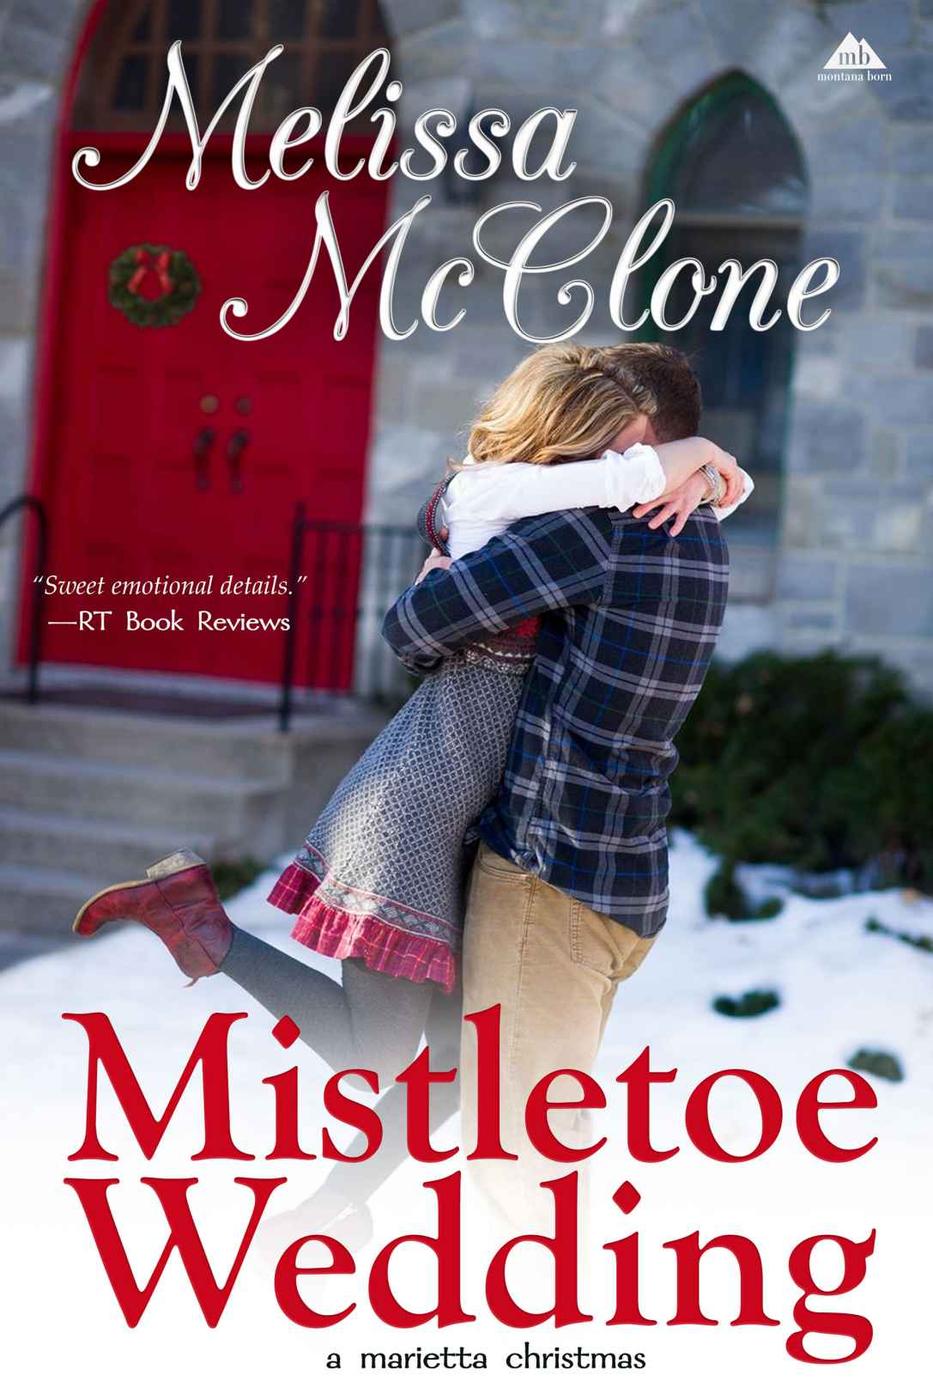 Mistletoe Wedding (2015) by Melissa McClone